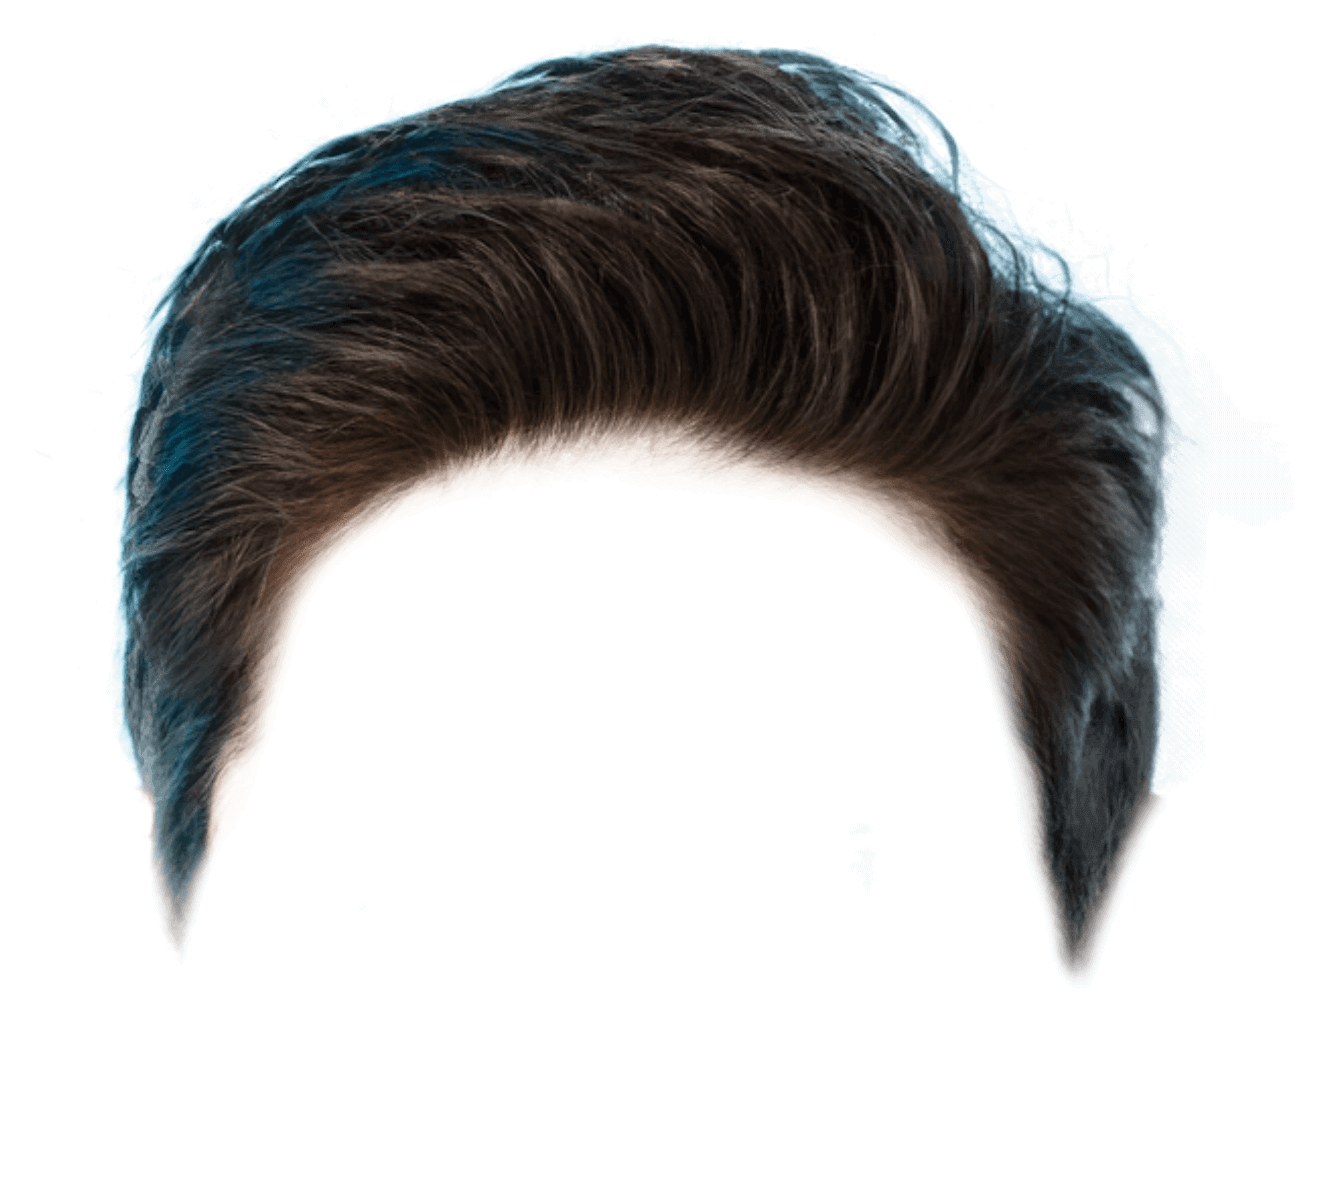 Hair PNG Transparent Images Download - PNG Packs